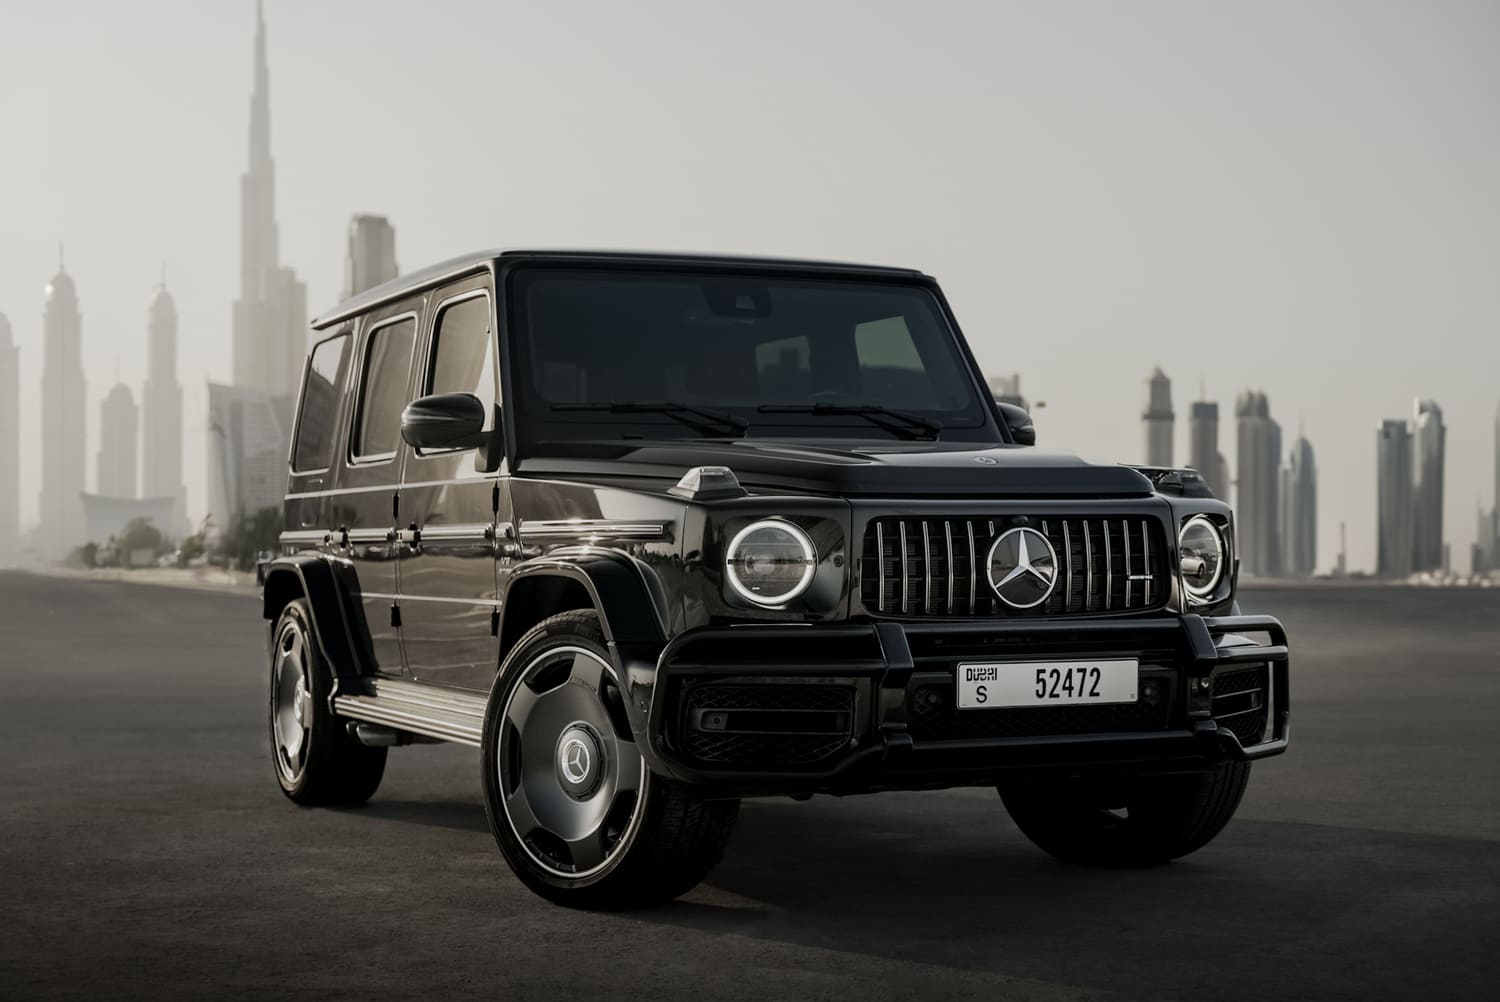 Dubai Luxury Car Dreams Realized -One and Only Luxury Car Rental Dubai